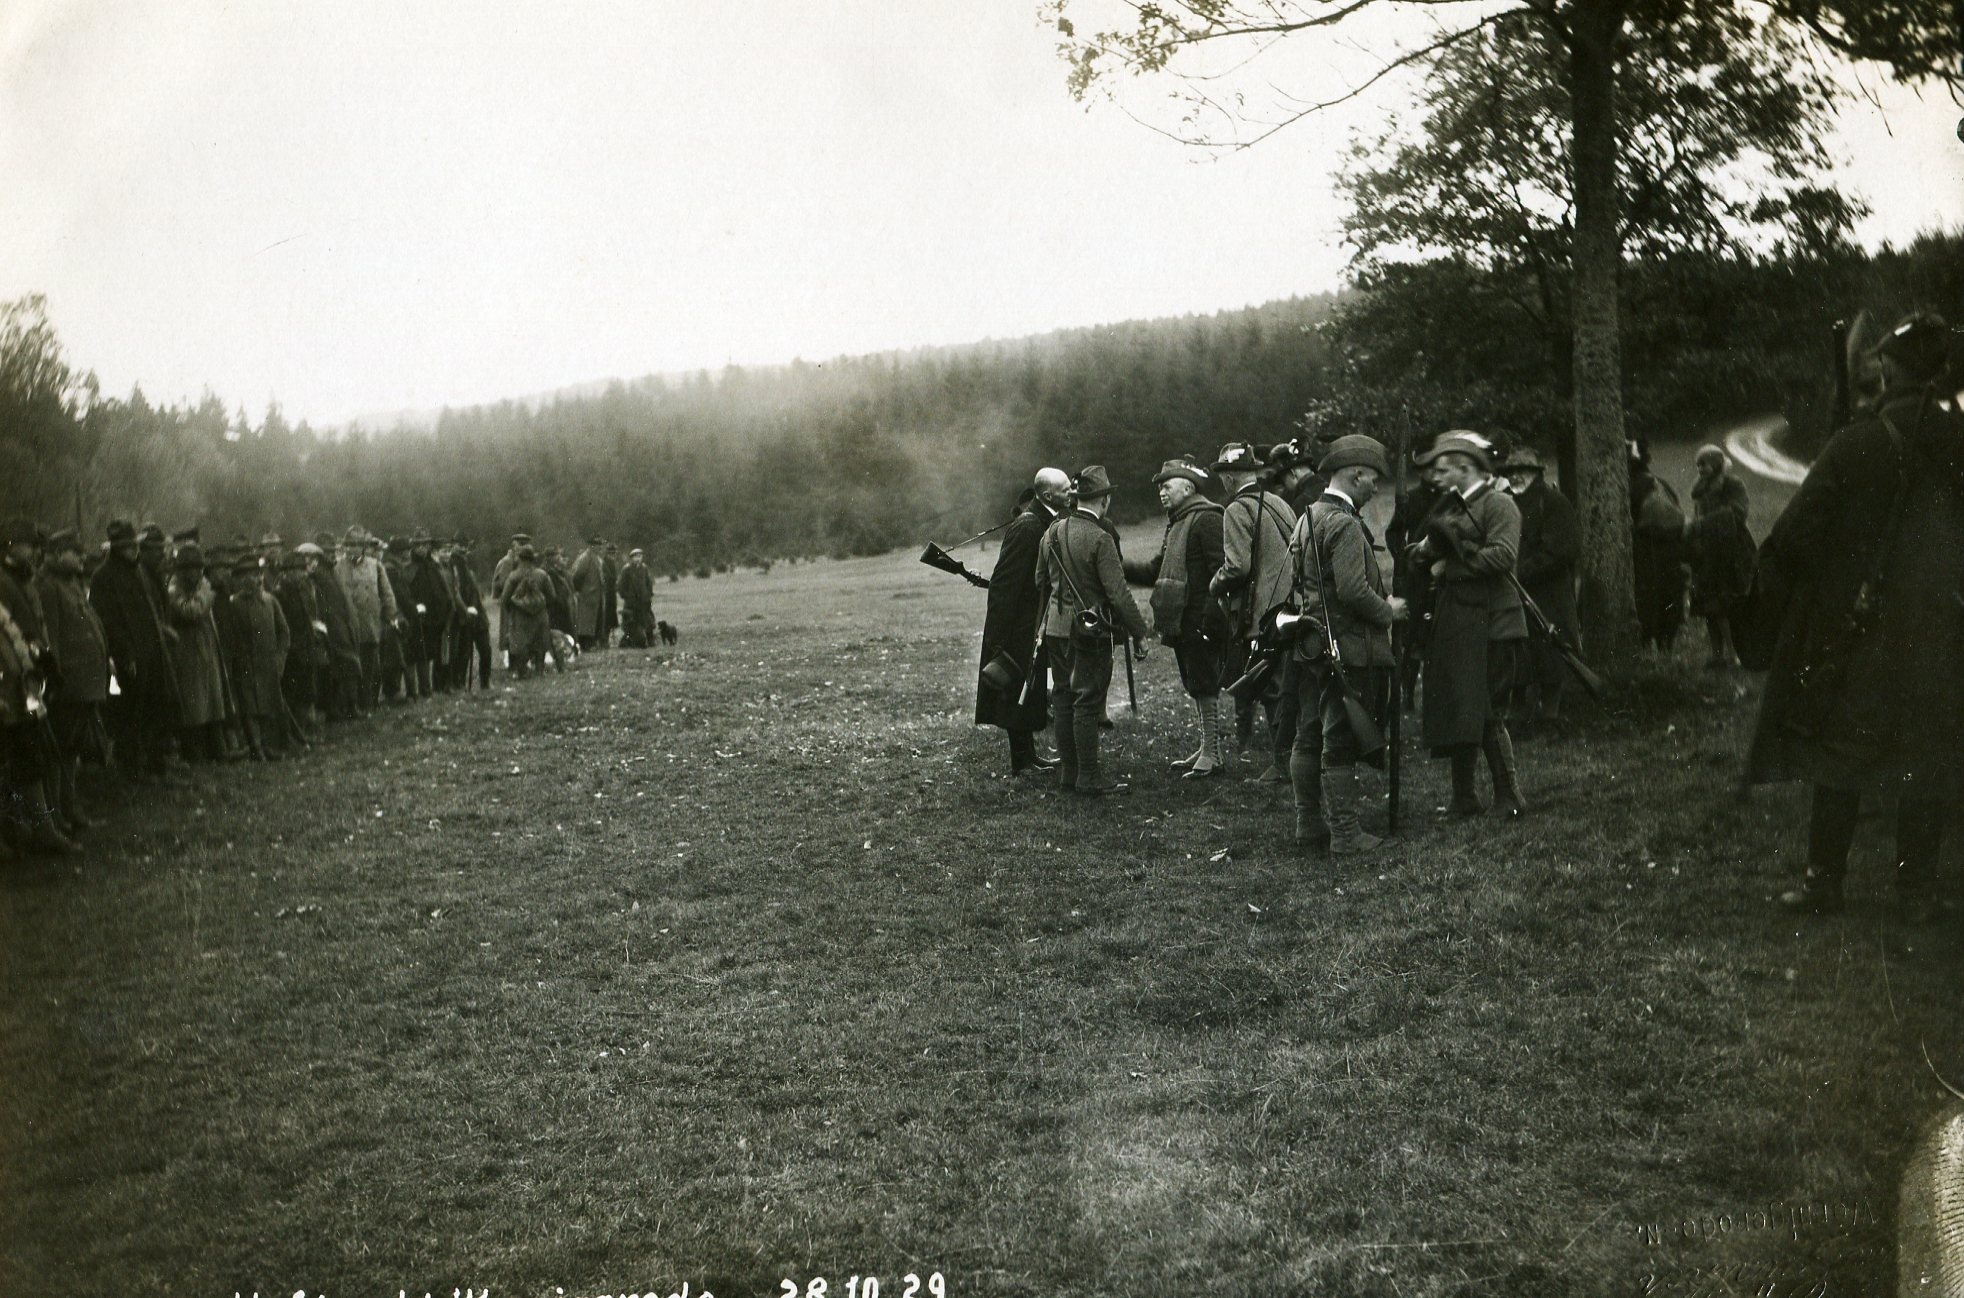 Fotografie, Hofjagd in Wernigerode am 28.10.1929 (Schloß Wernigerode GmbH RR-F)